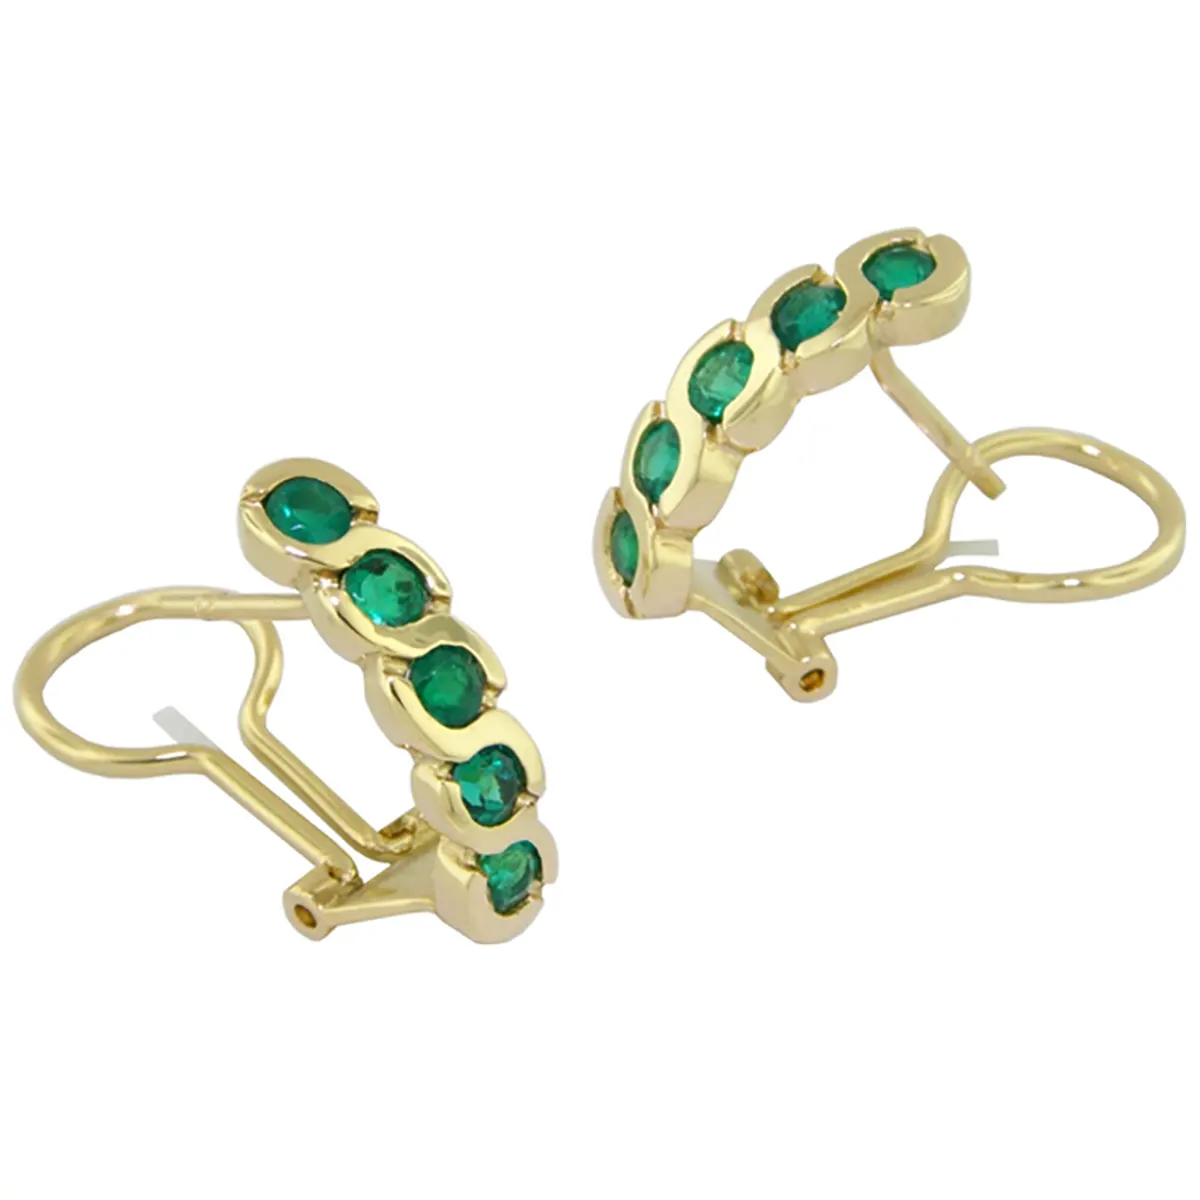 Drop Emerald Earrings in 18K Yellow Gold Bezel Setting With Clip Backs